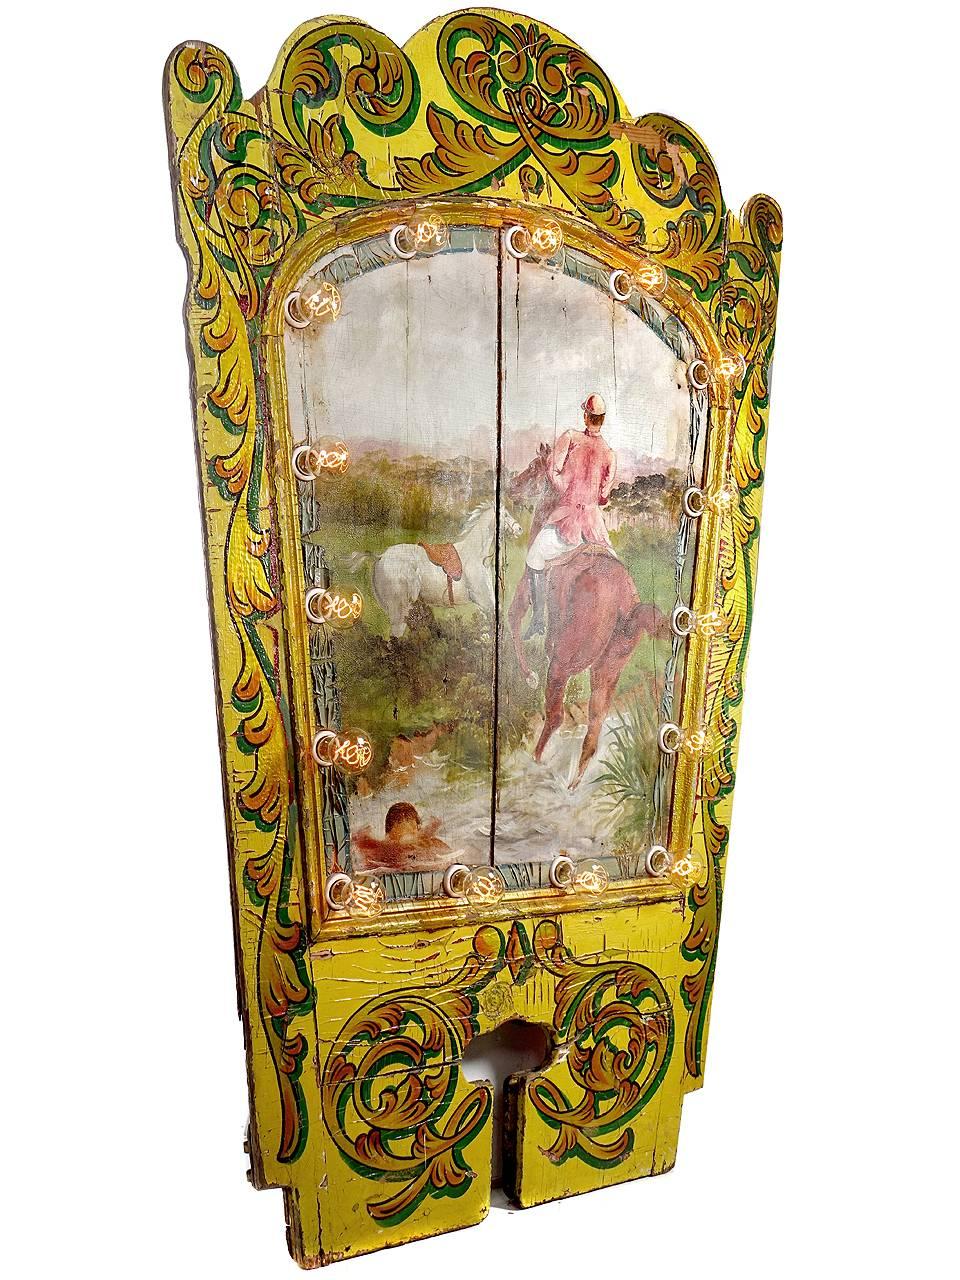 carousel panel